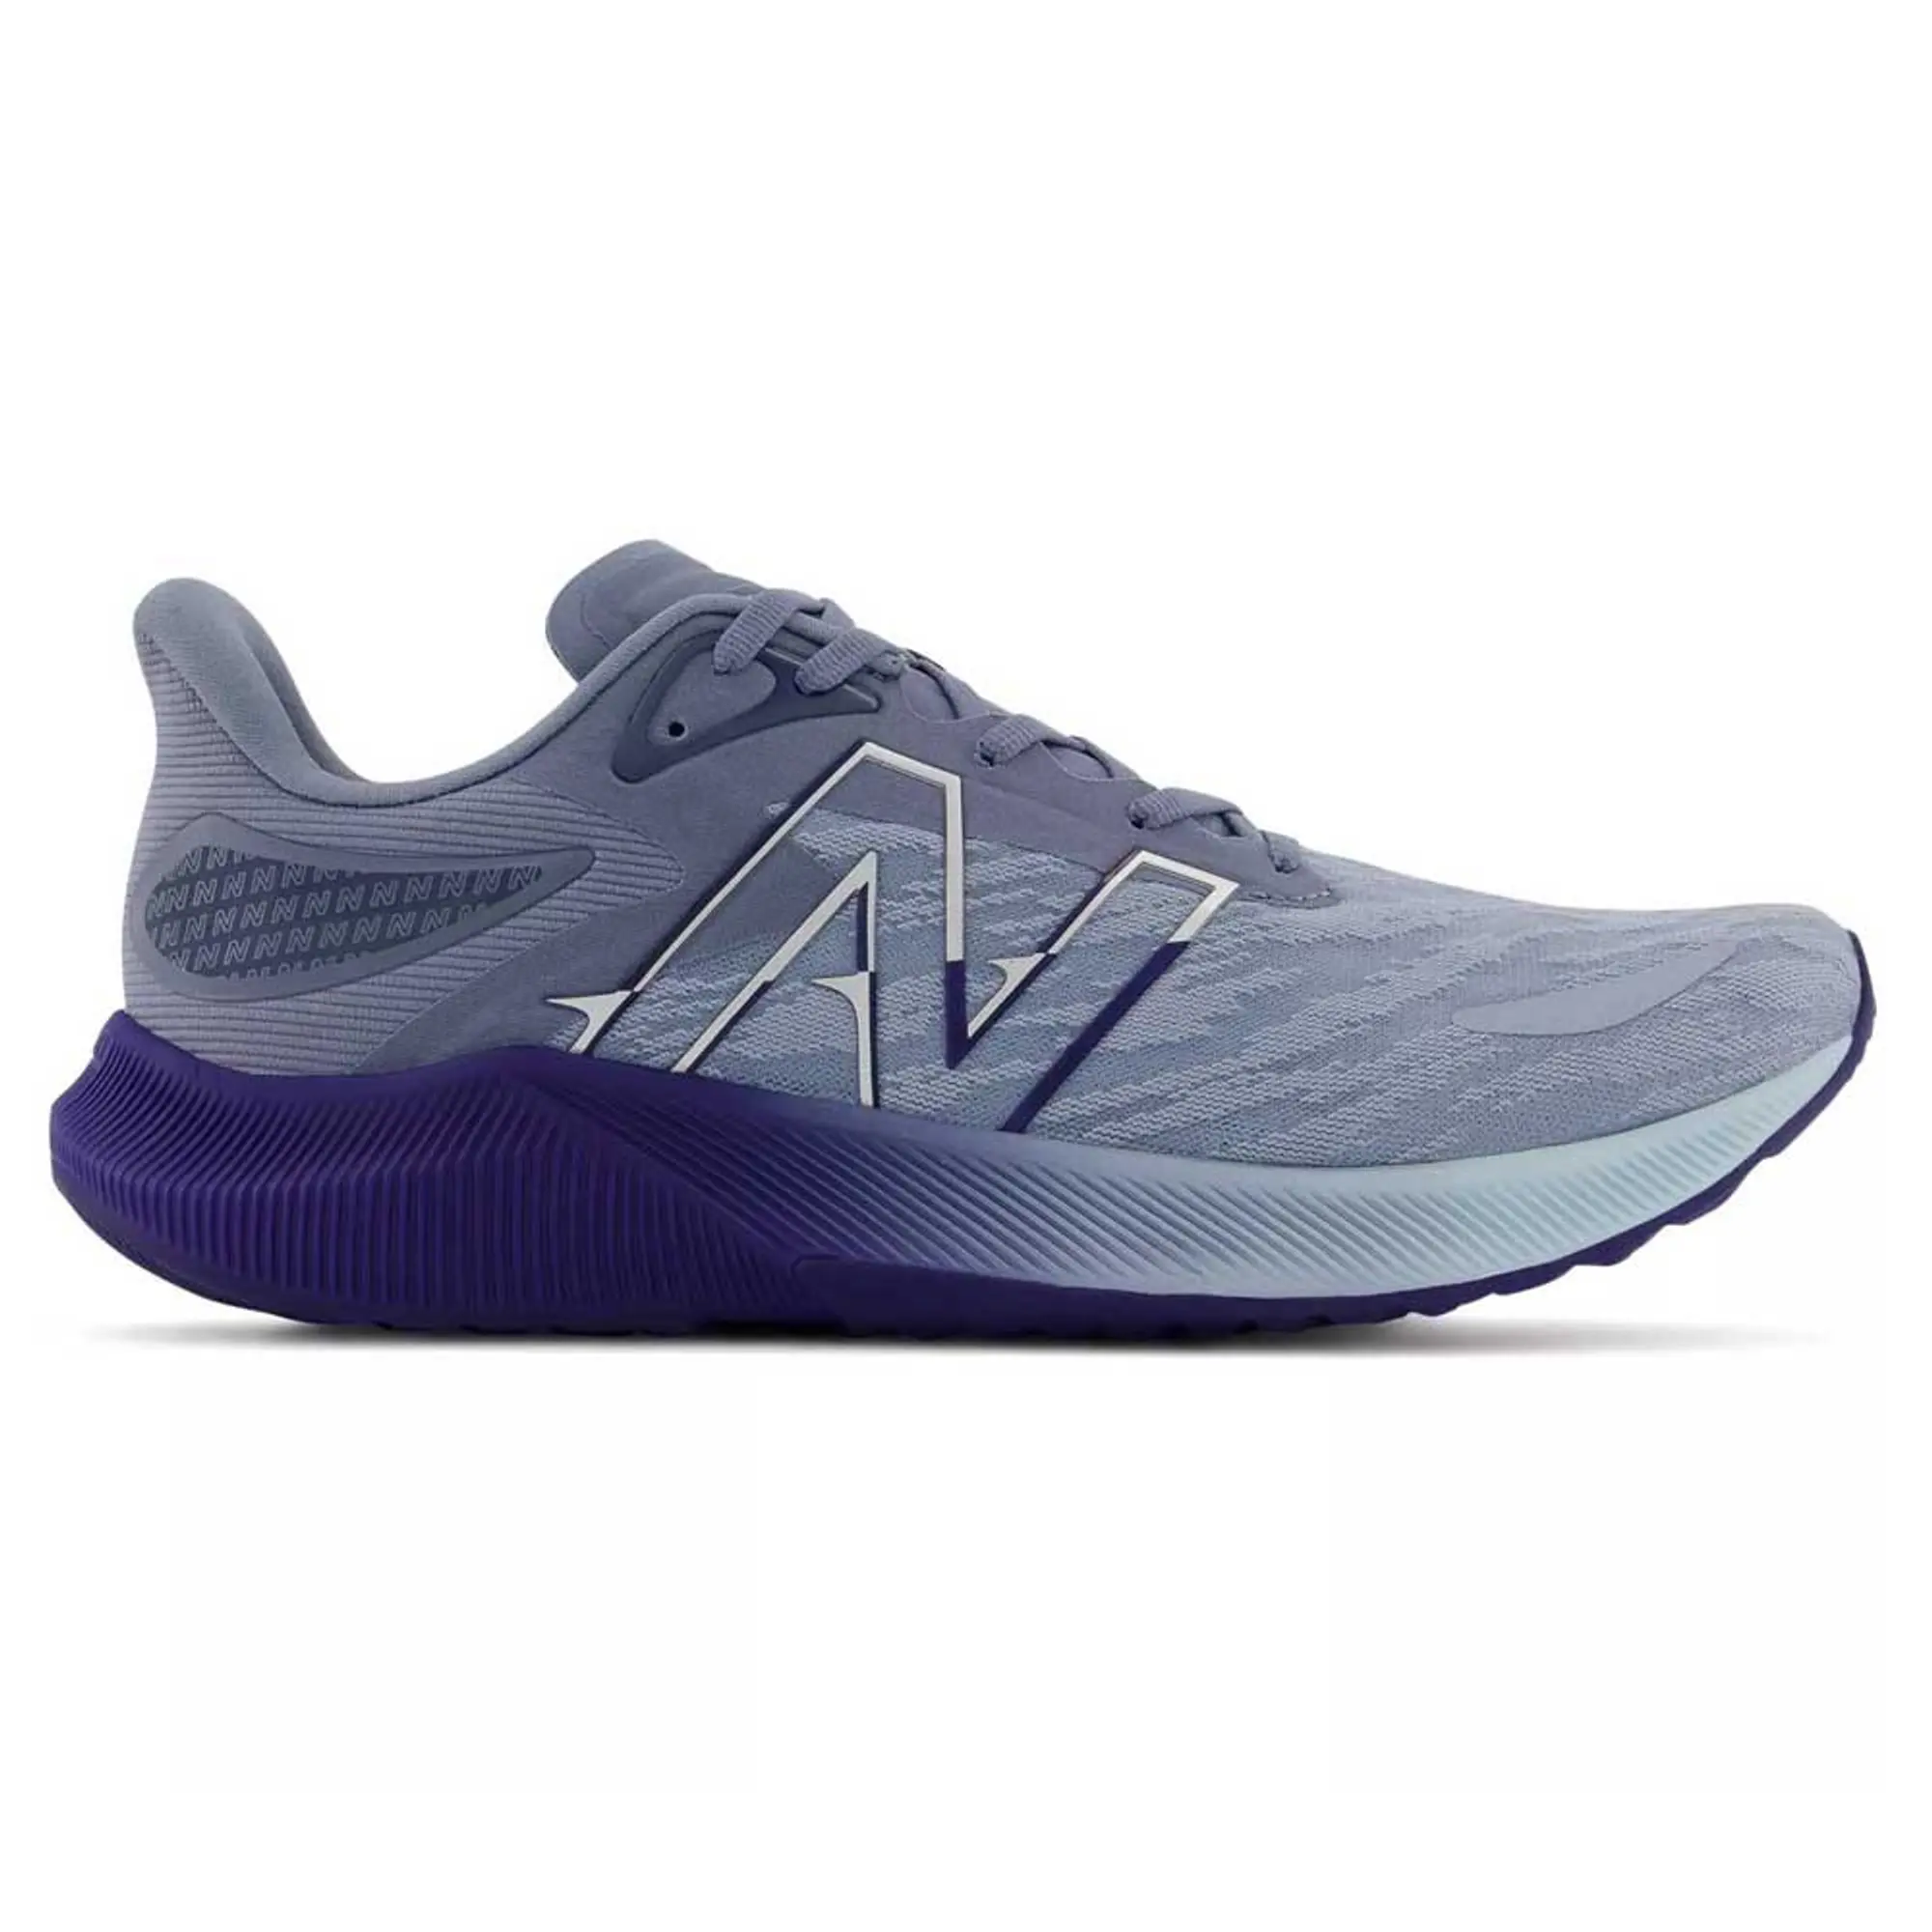 New Balance Fuelcell Propel V3 Neutral Running Shoe Men - Blue